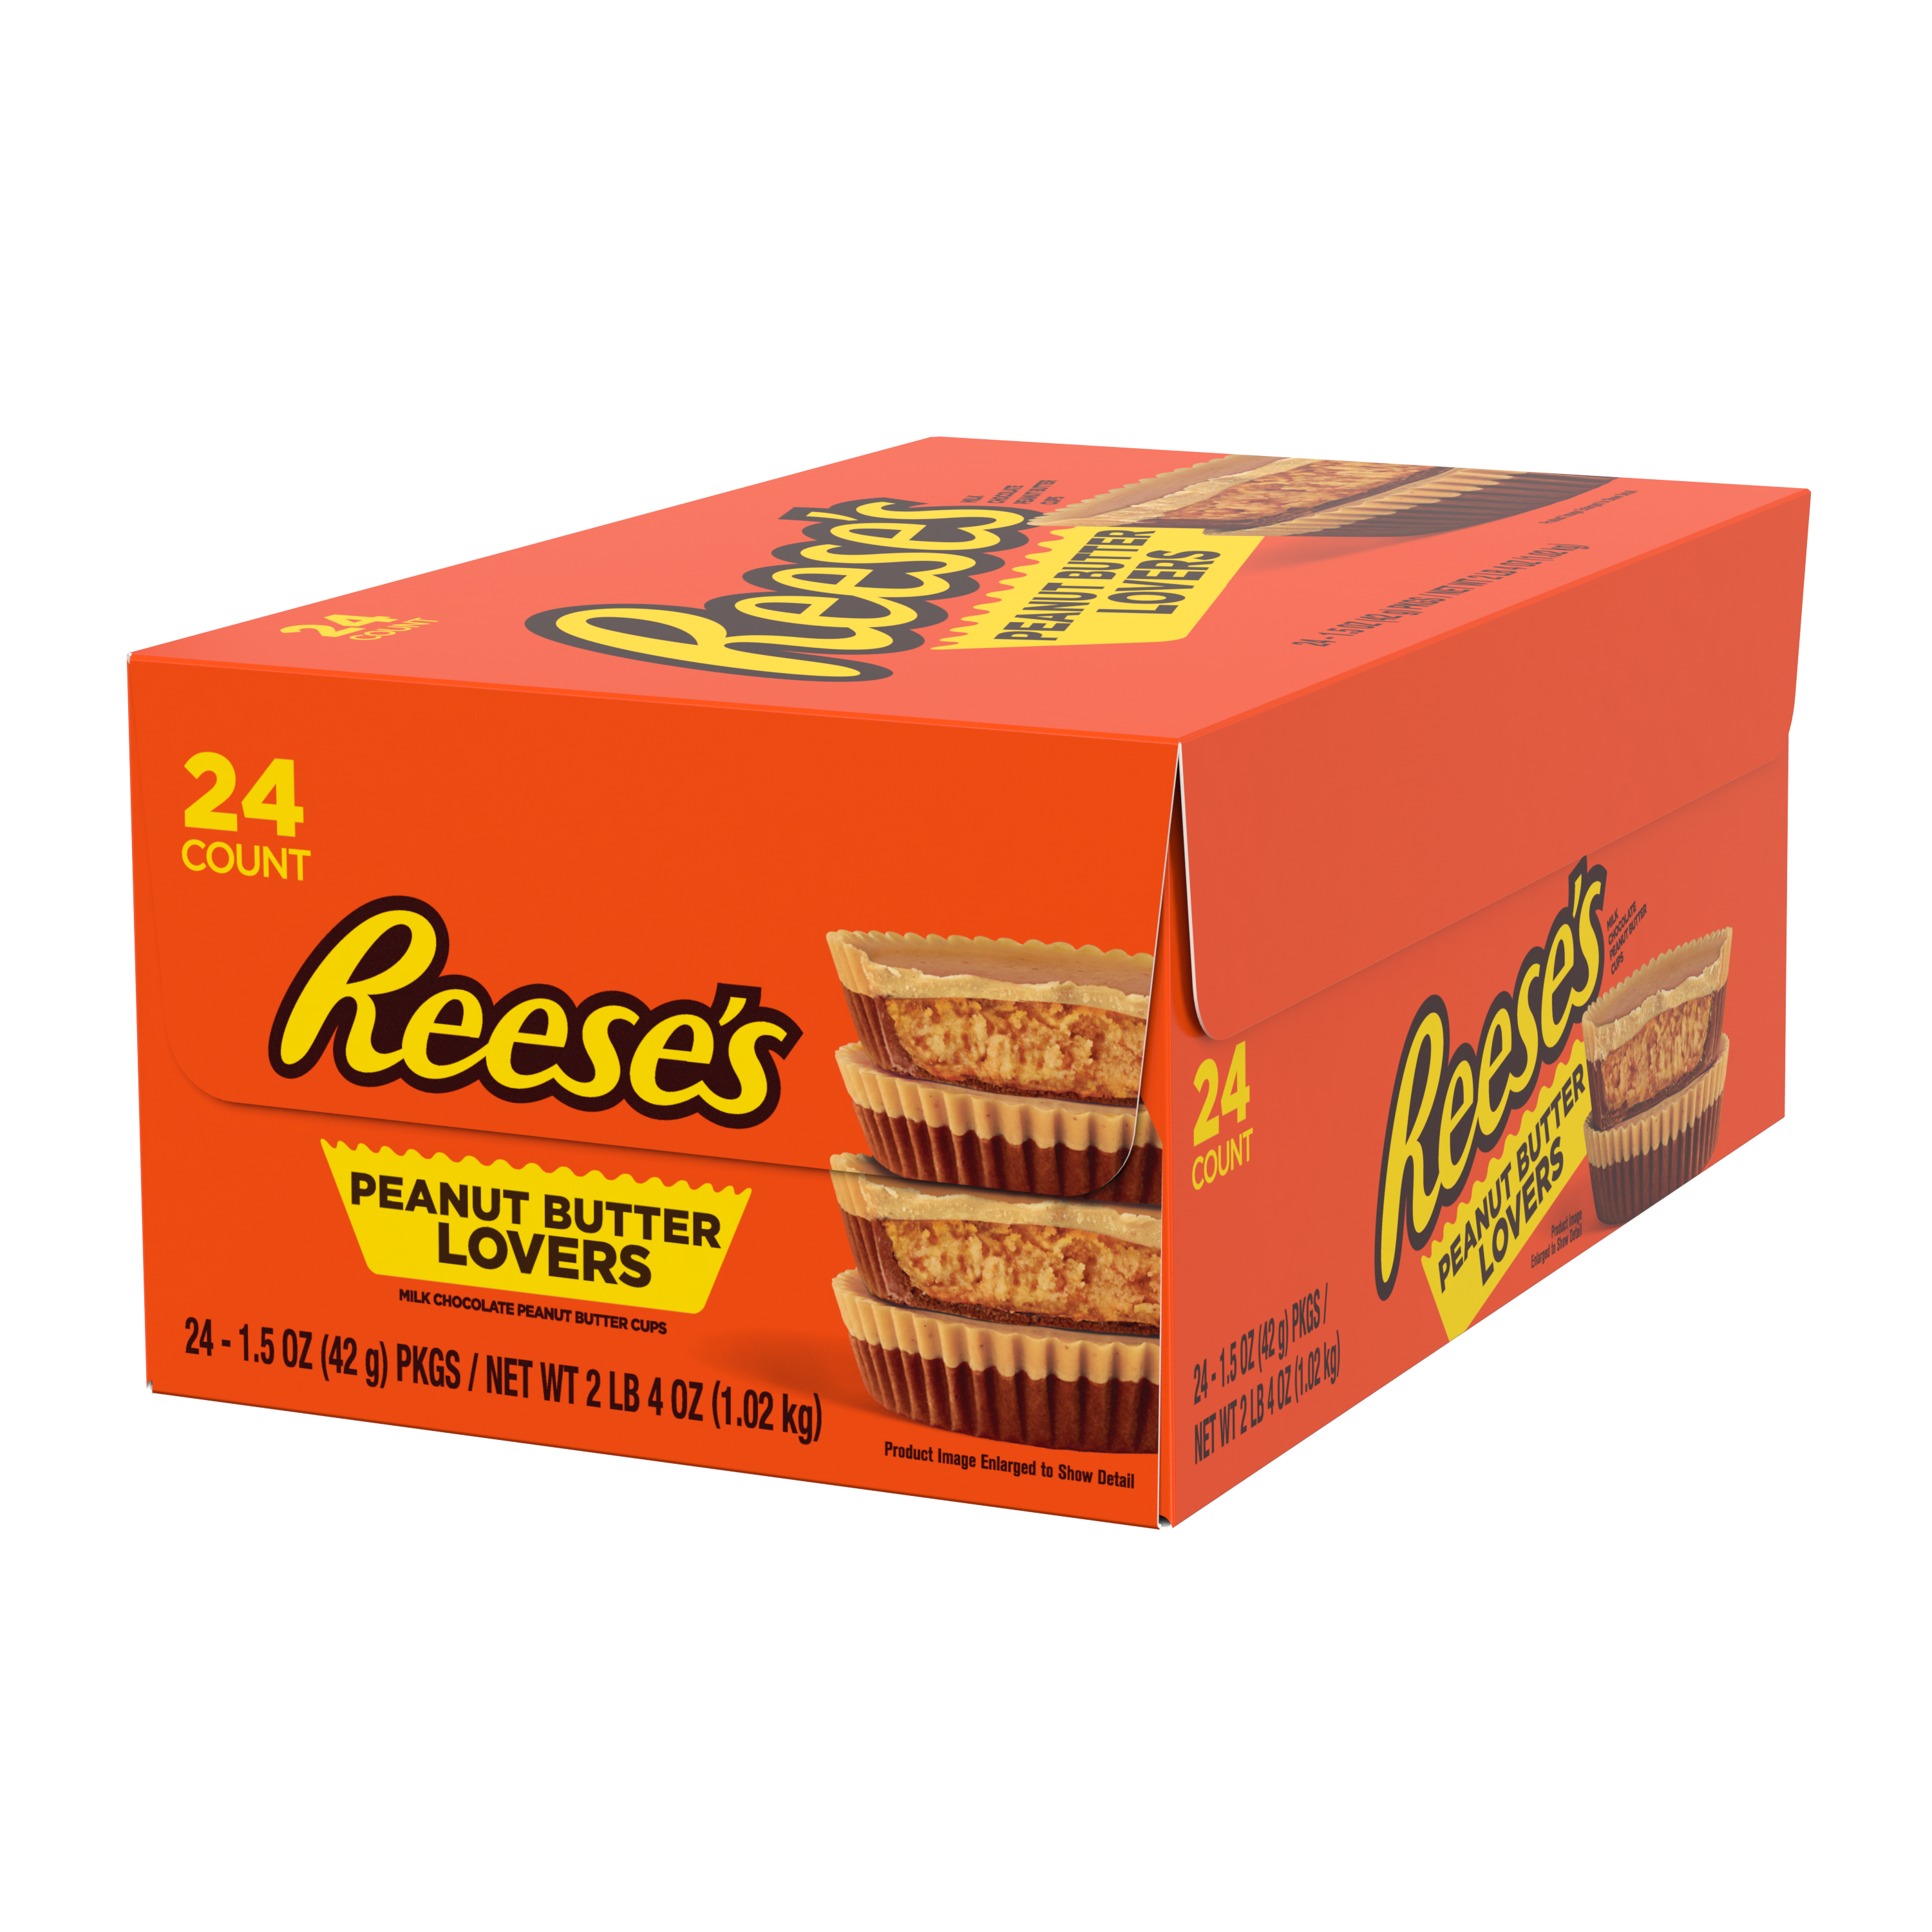 REESE'S STICKS Milk Chocolate Peanut Butter Standard Size 1.5oz Candy Bar